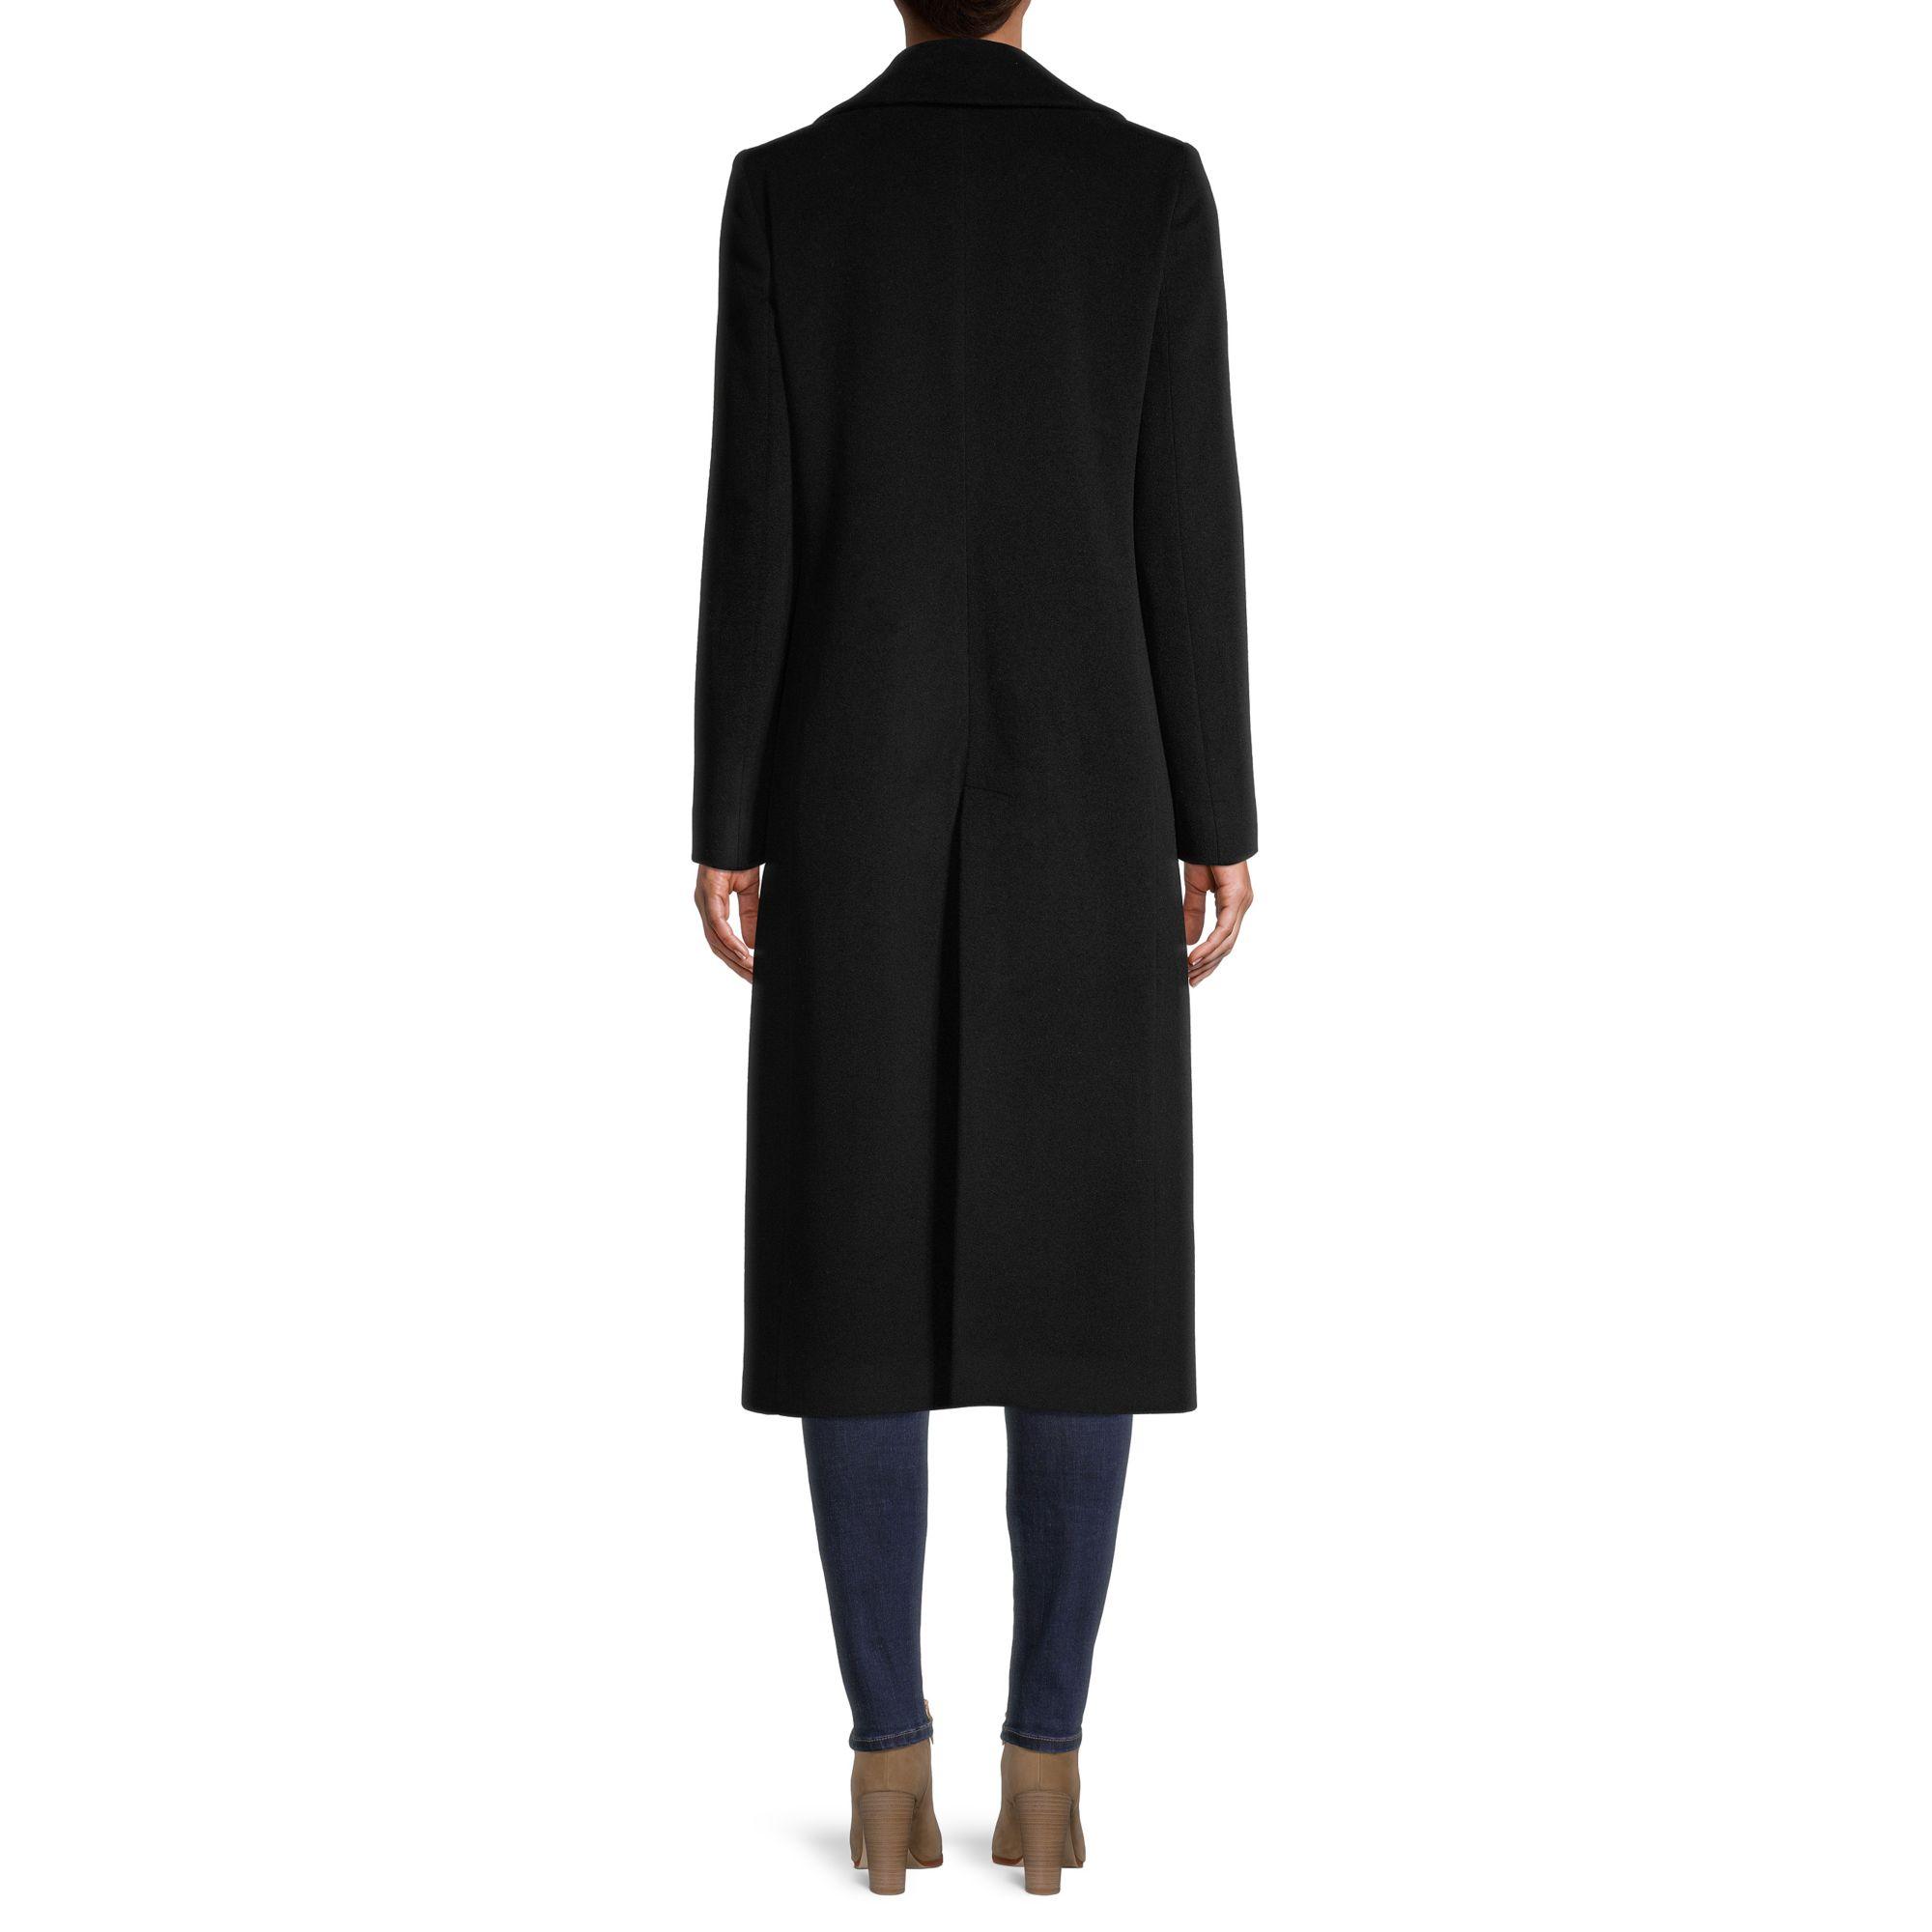 Cinzia Rocca Notch Collar Wool-blend Coat in Black - Lyst